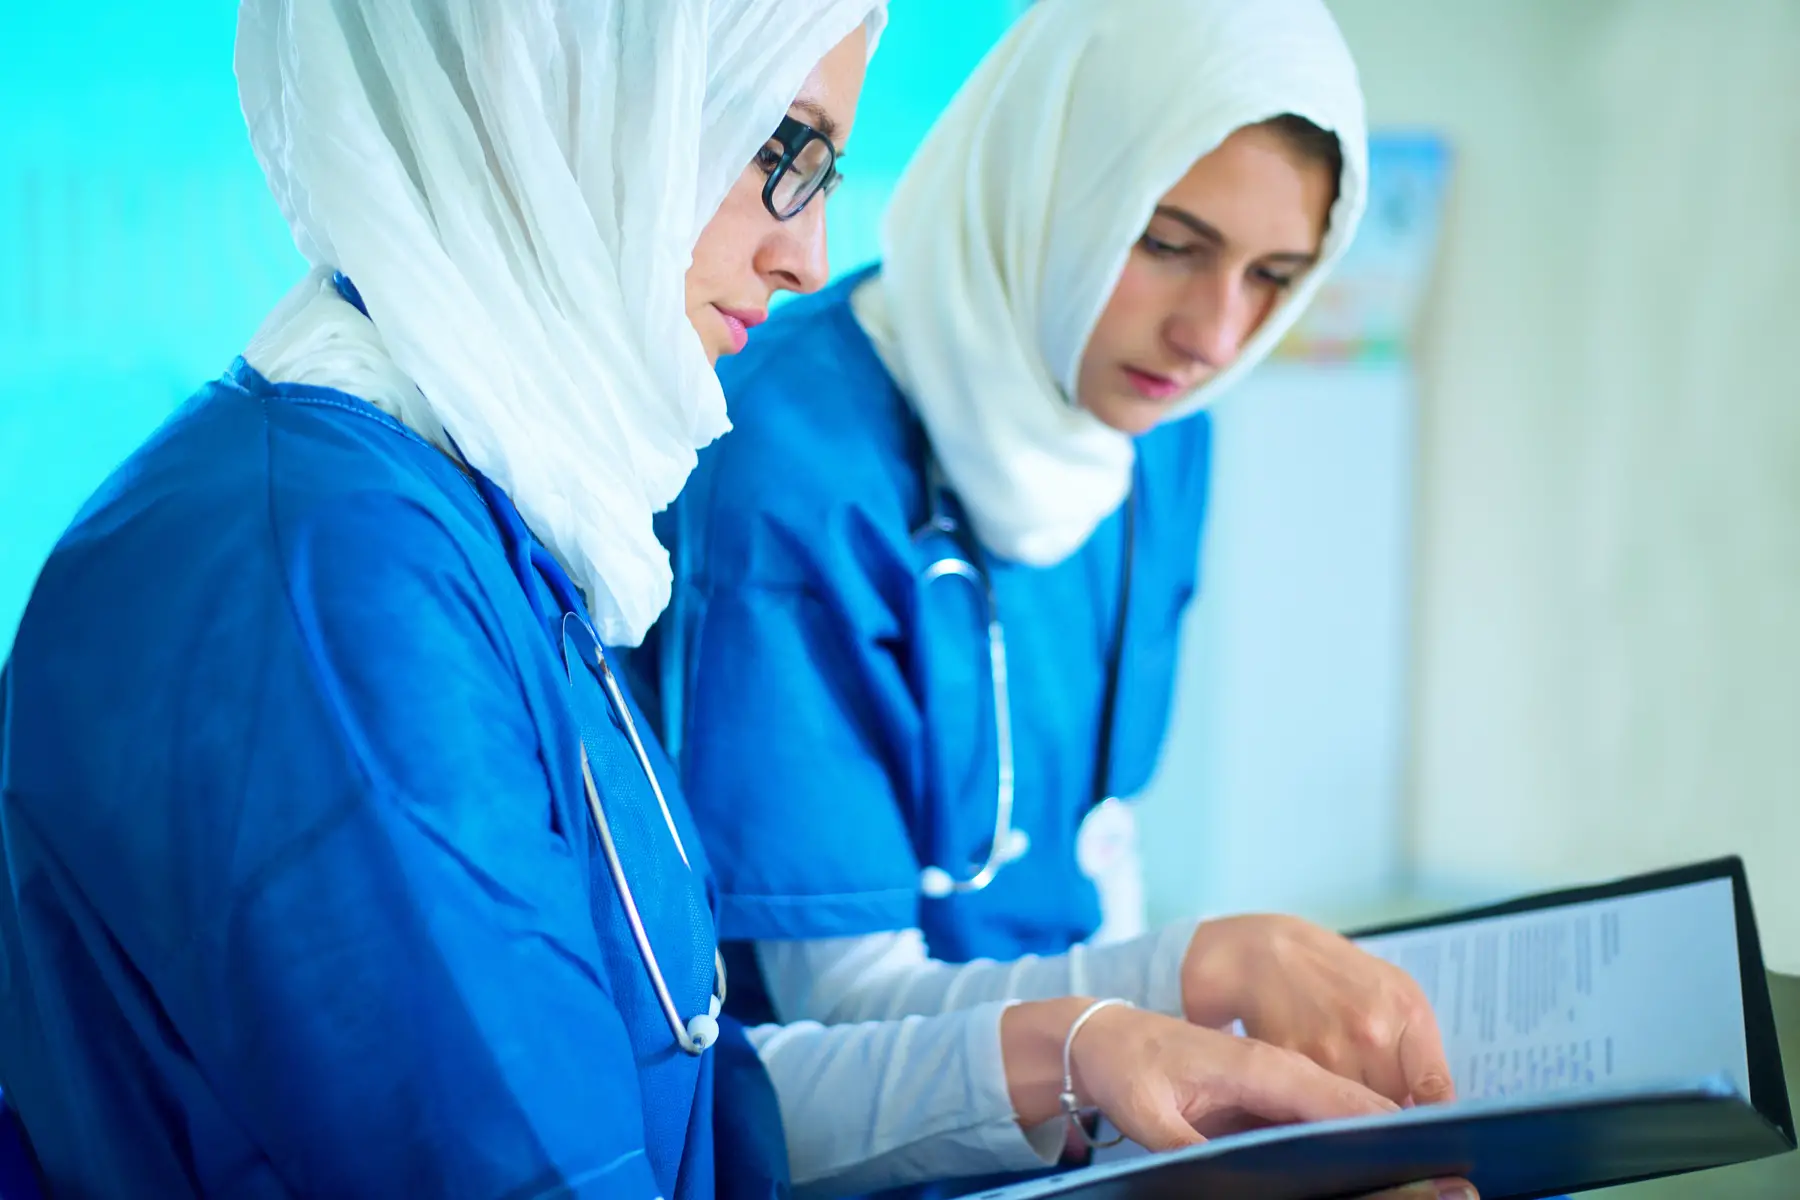 sexual health uae: doctors wearing hijabs reading charts